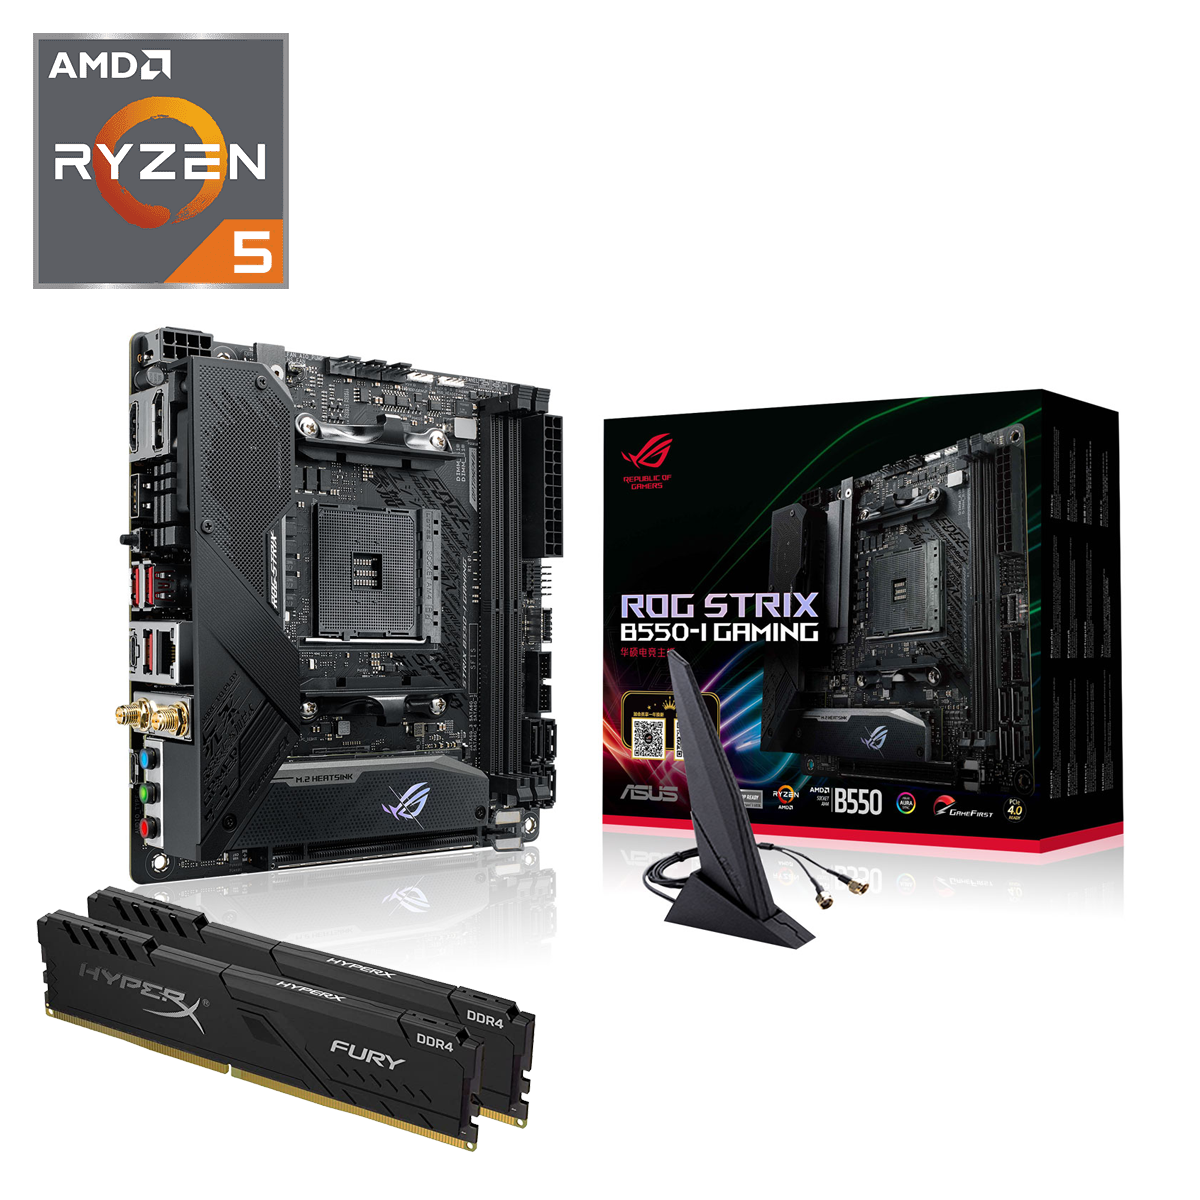 AMD Ryzen 5 5600X - Asus Strix B550-I Gaming Bundle